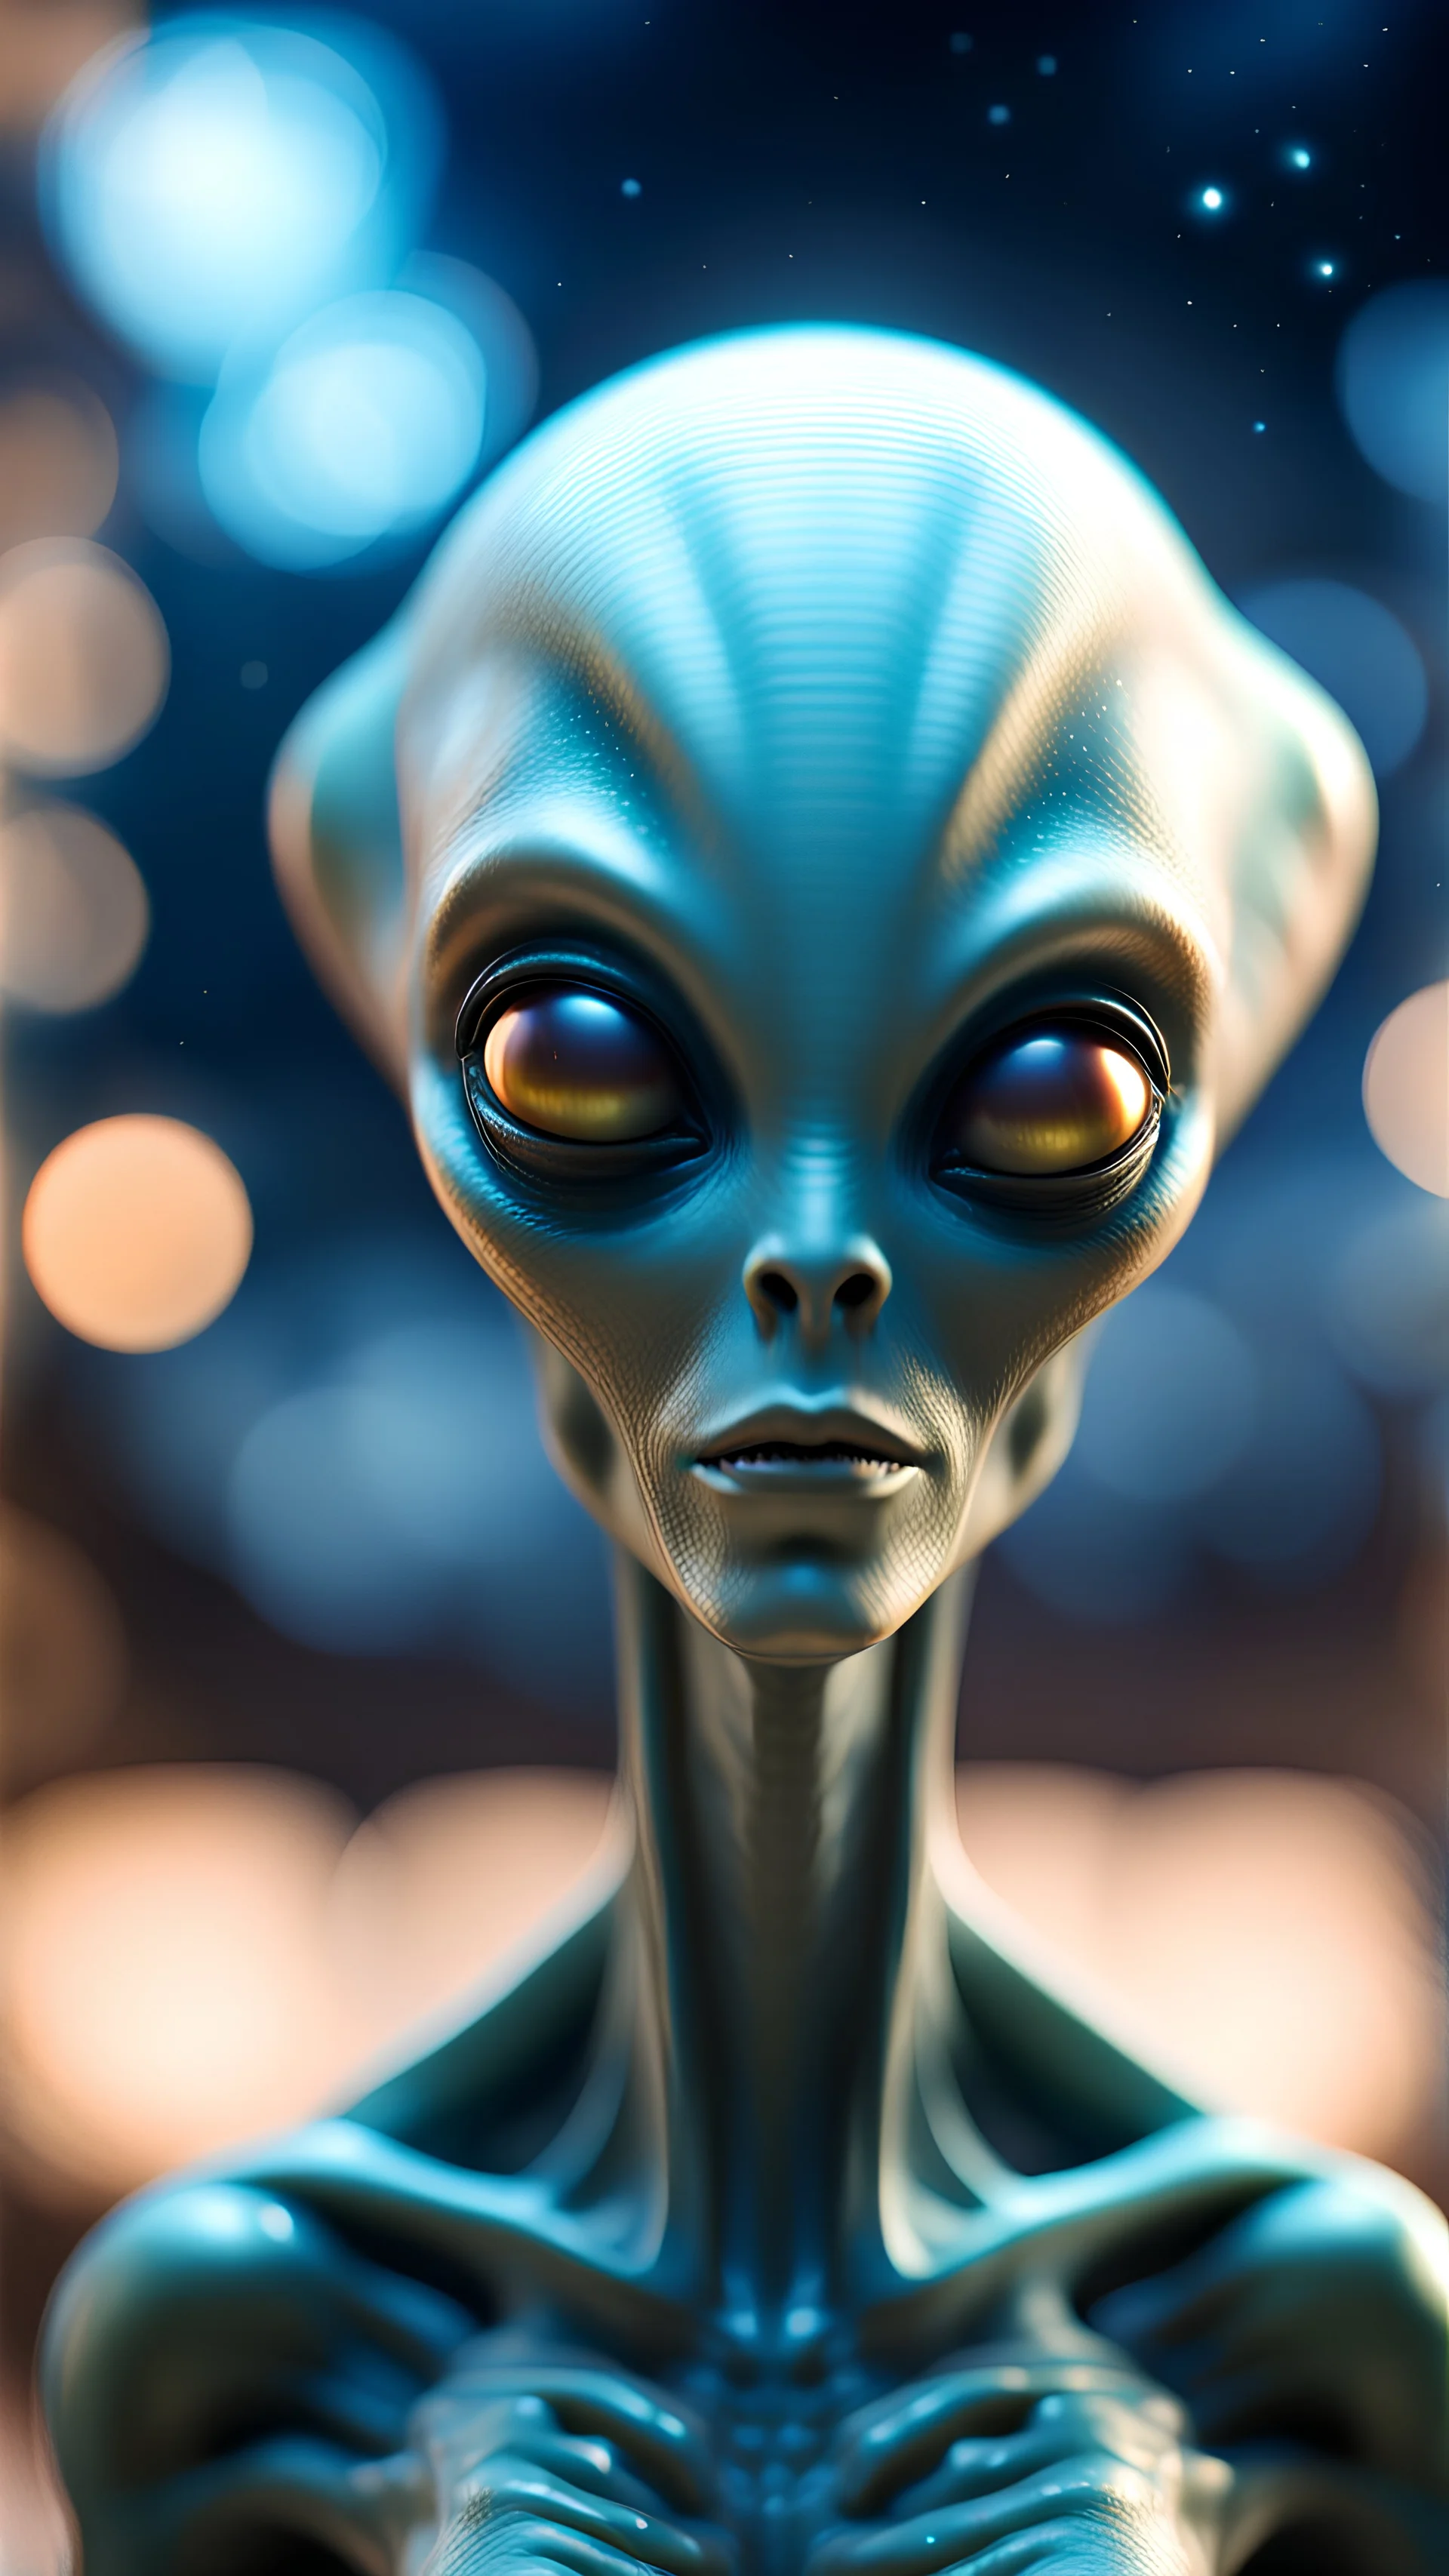 alien virgin in heaven,bokeh like f/0.8, tilt-shift lens 8k, high detail, smooth render, down-light, unreal engine, prize winning